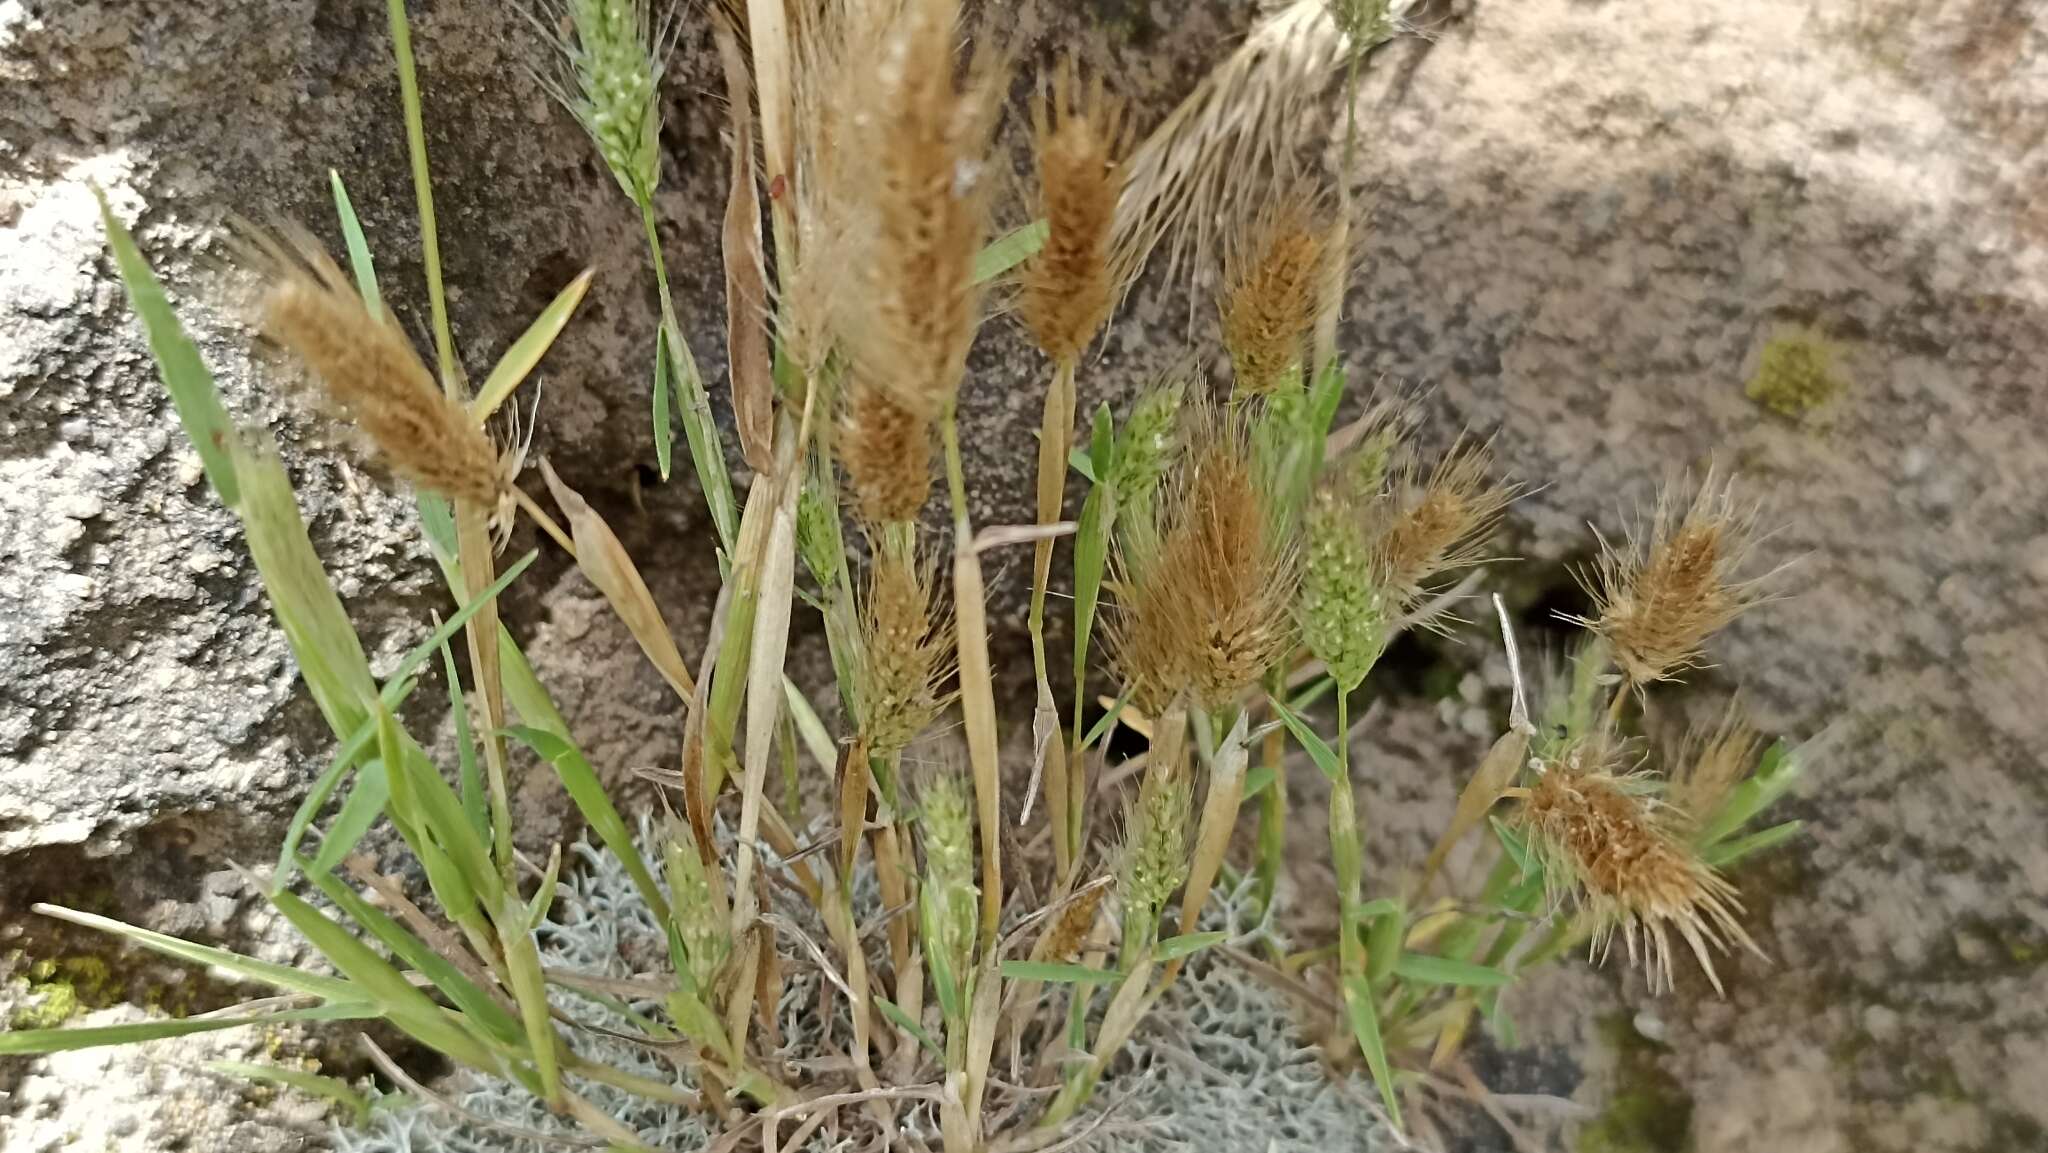 Image of Mediterranean rabbitsfoot grass